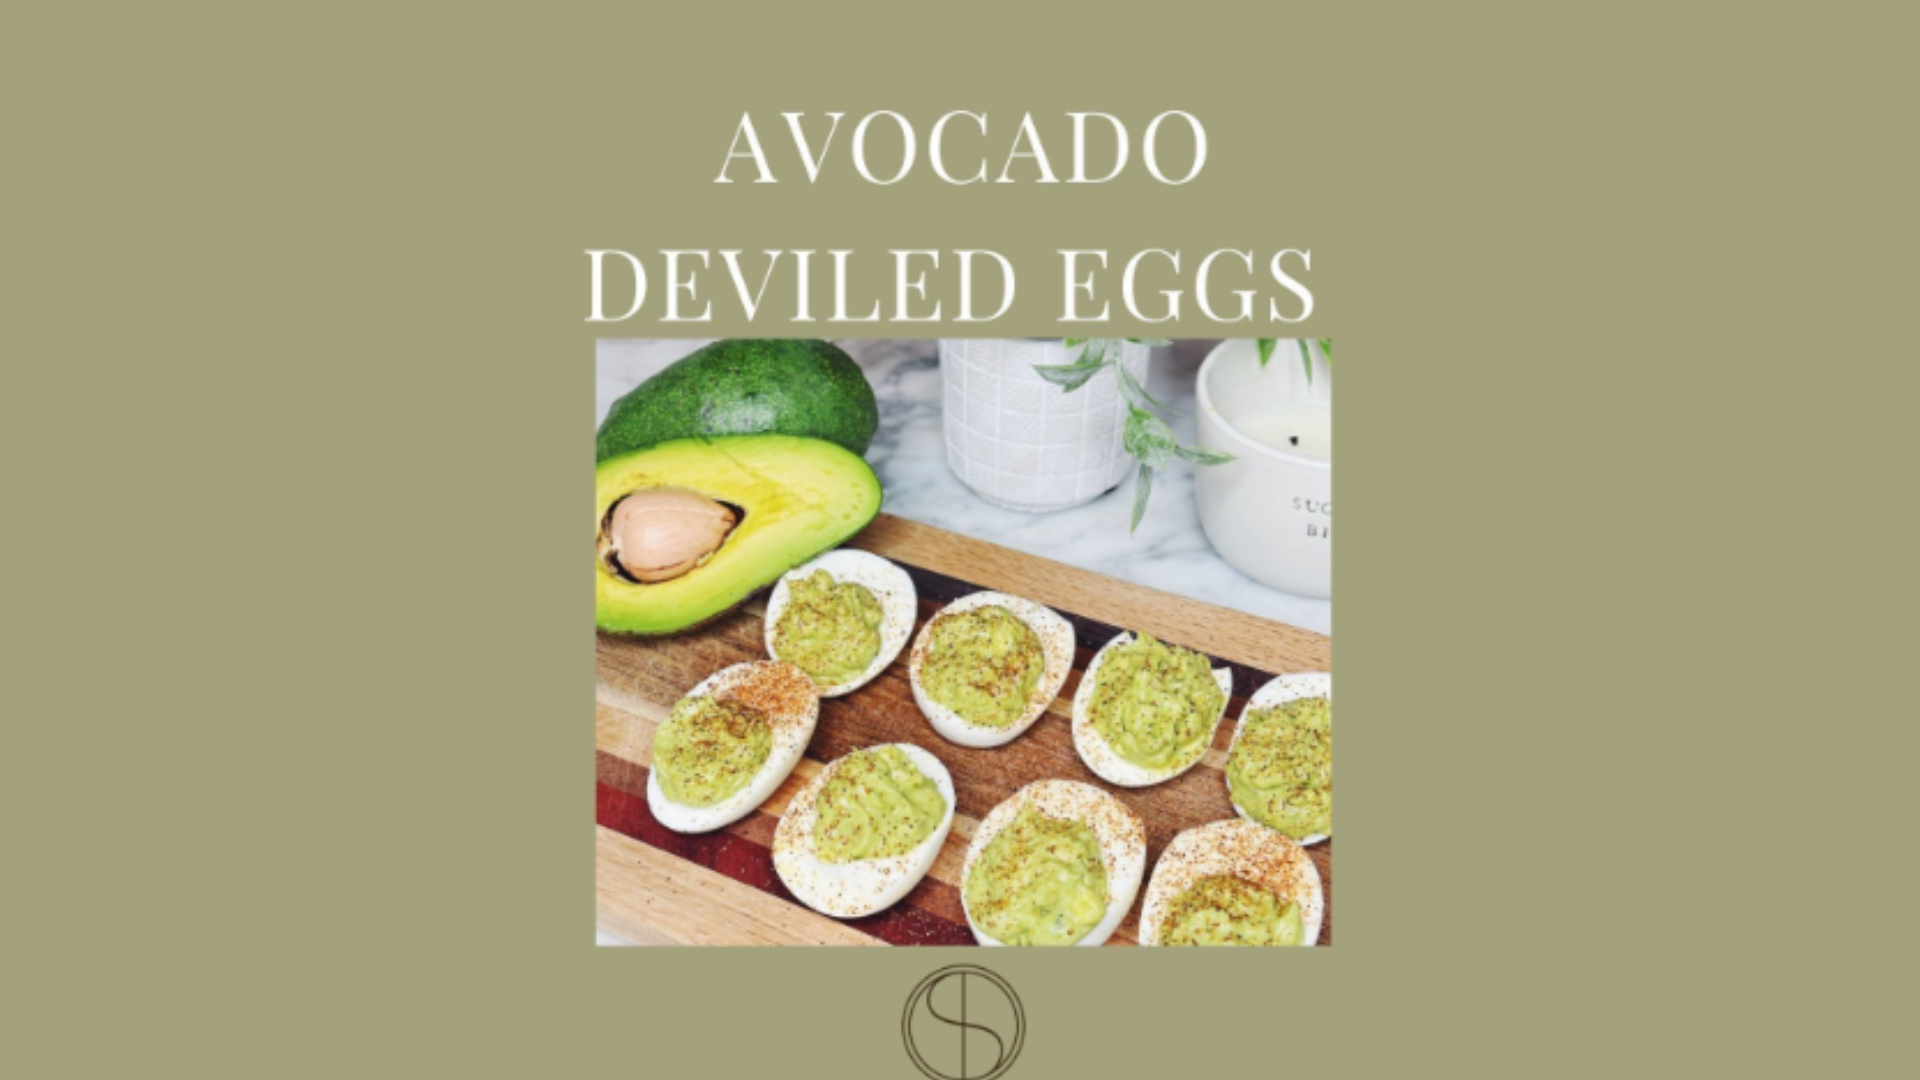 avocado devilled eggs deviled eggs with avocado recipe for deviled eggs with avocado deviled egg recipes with avocado